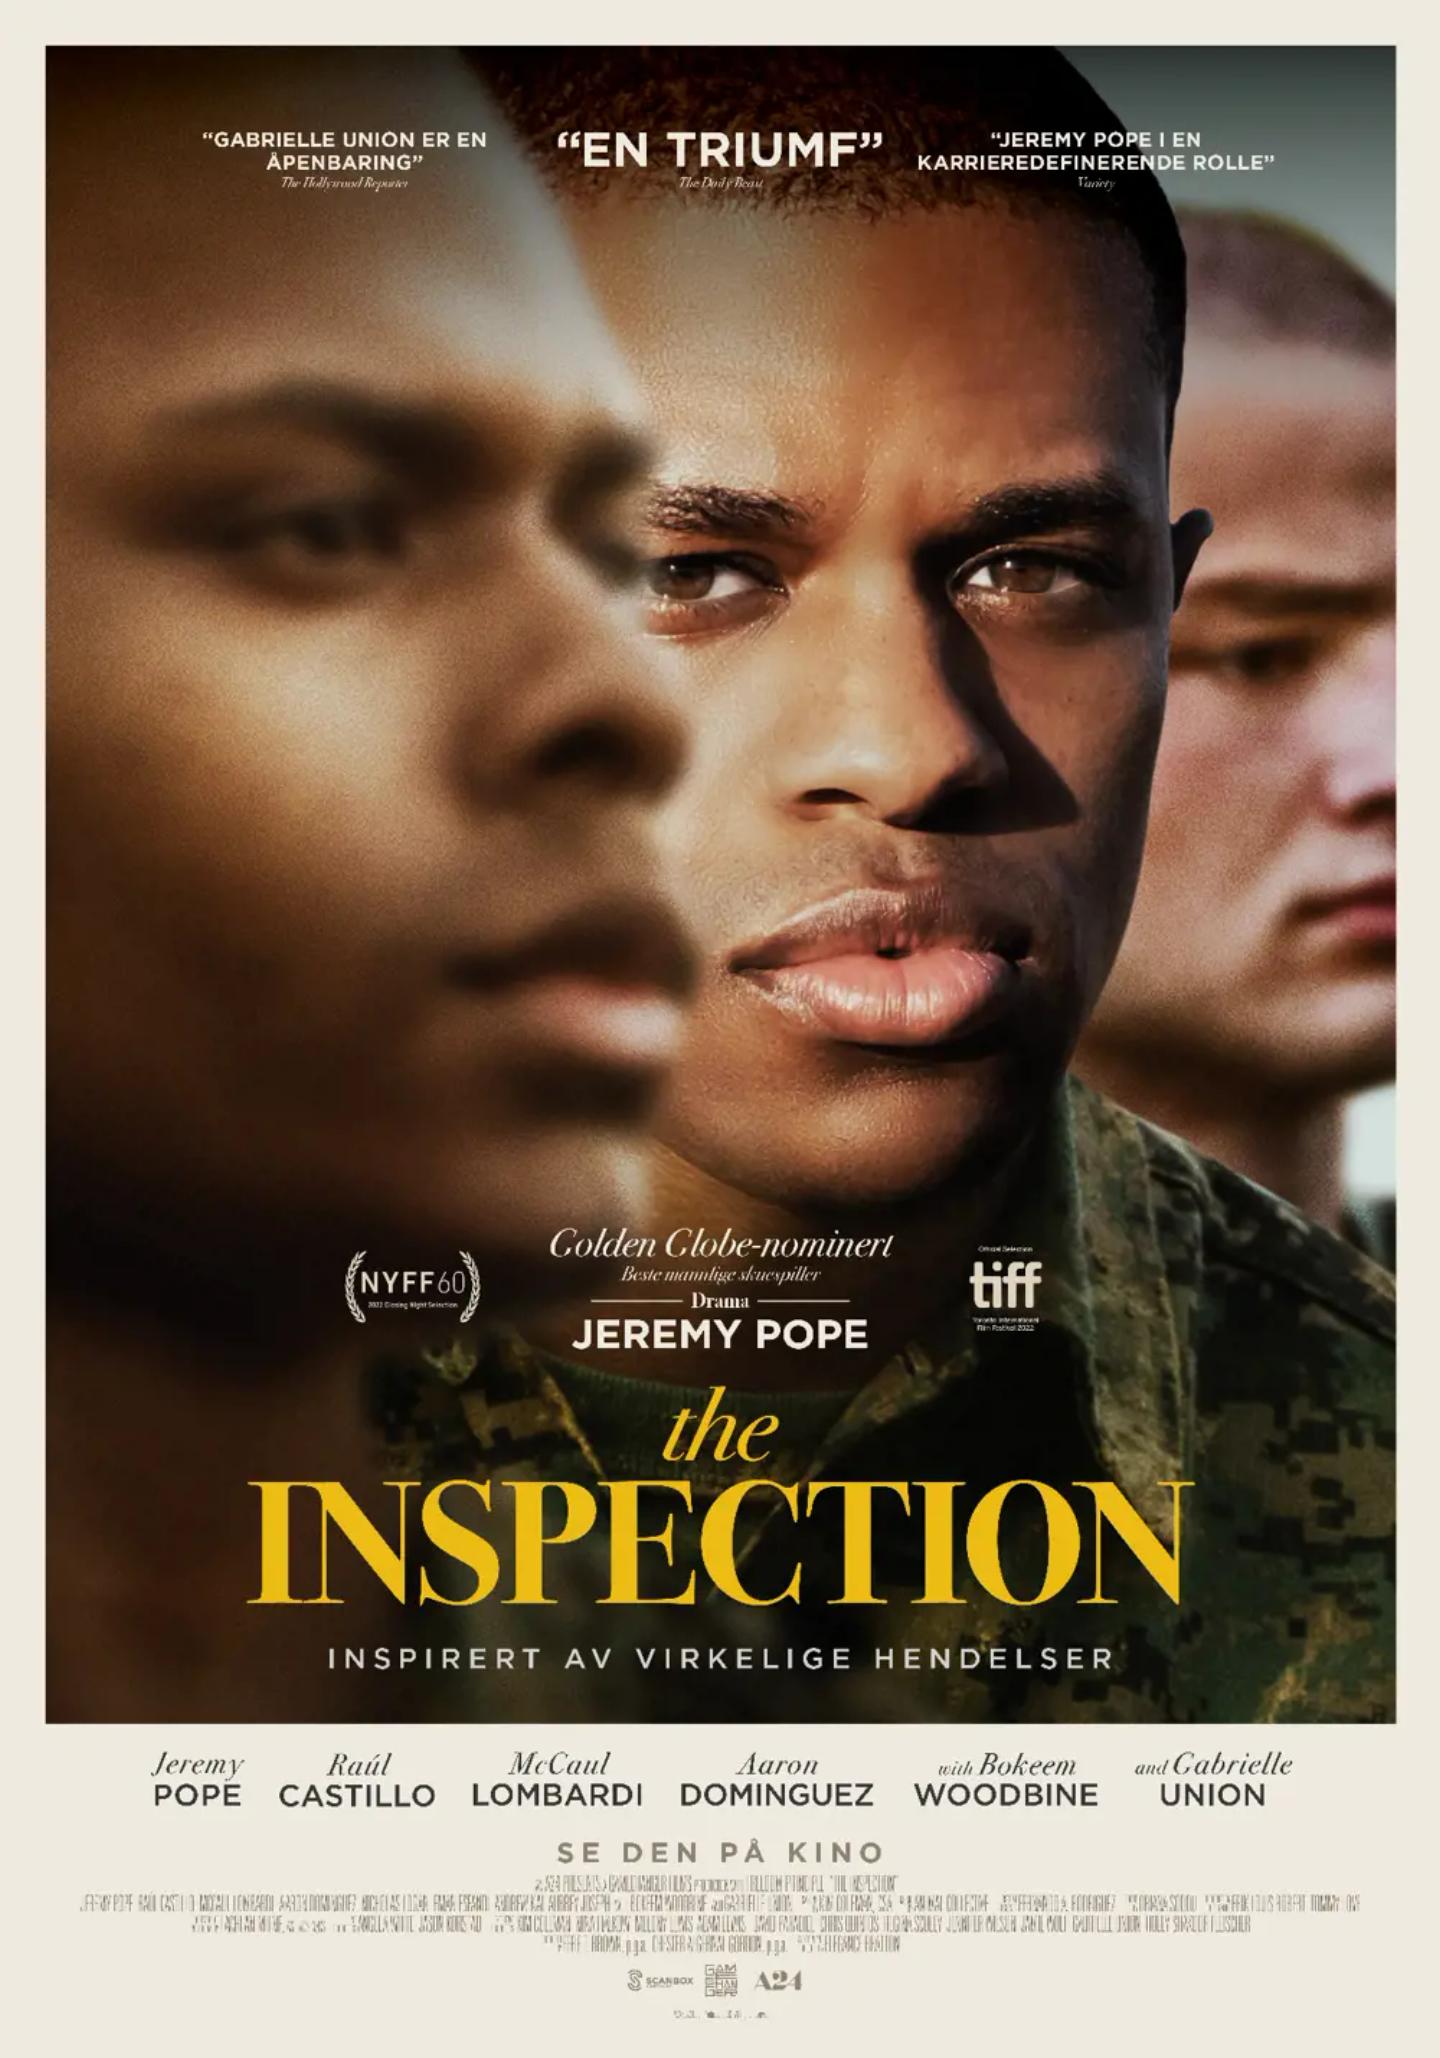 Plakat for 'The Inspection'